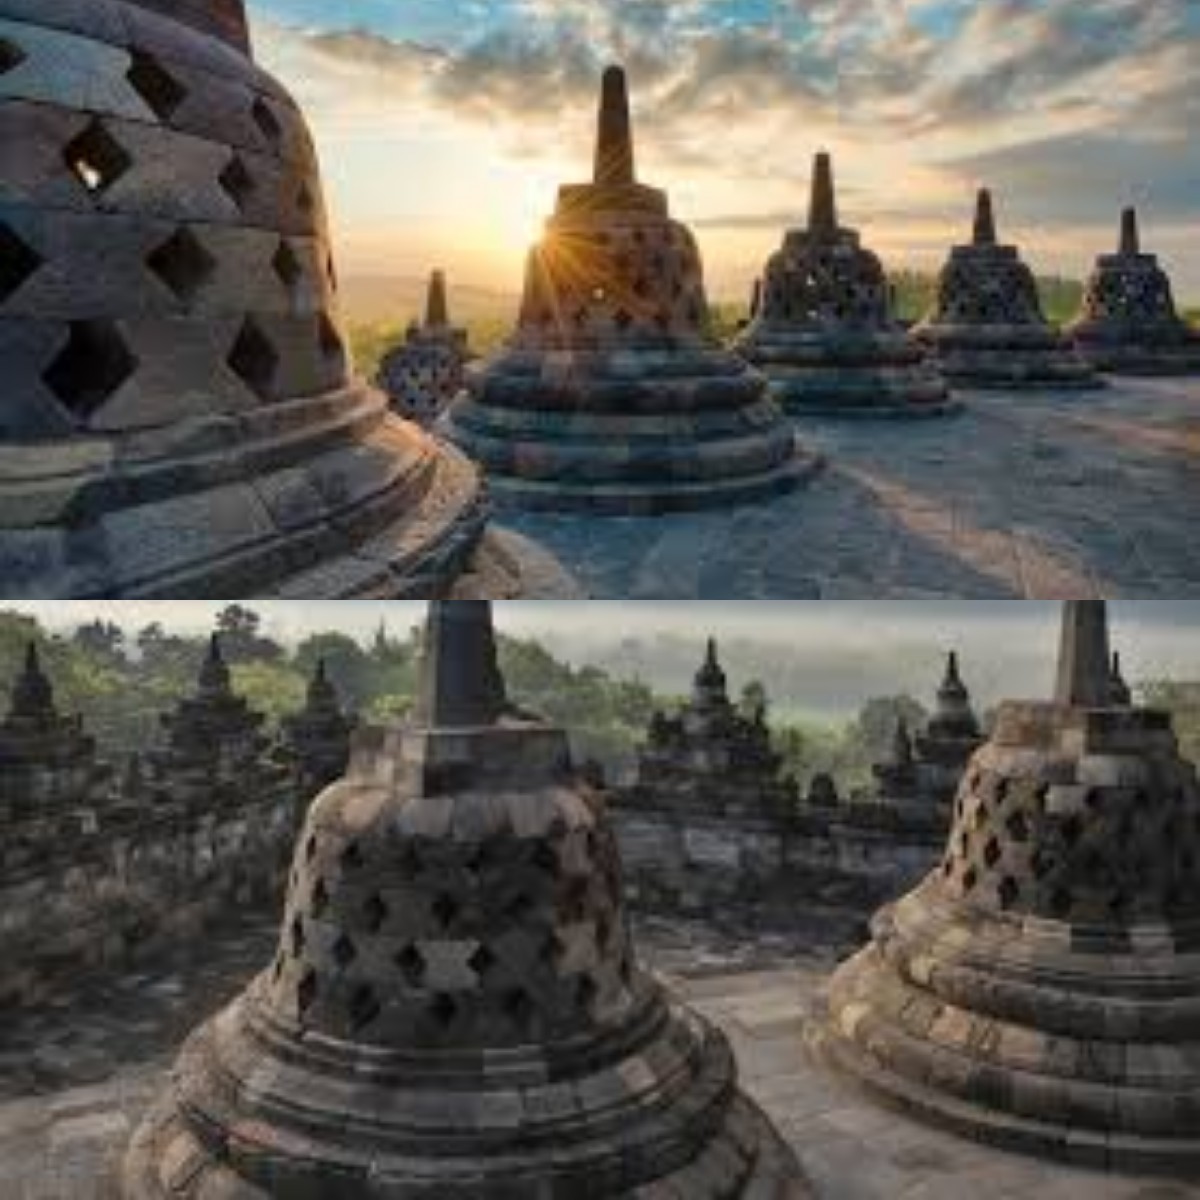 Taukah Kamu? Ternyata Inilah Sejarah Awal Mula Berdirnya Candi Borobudur 